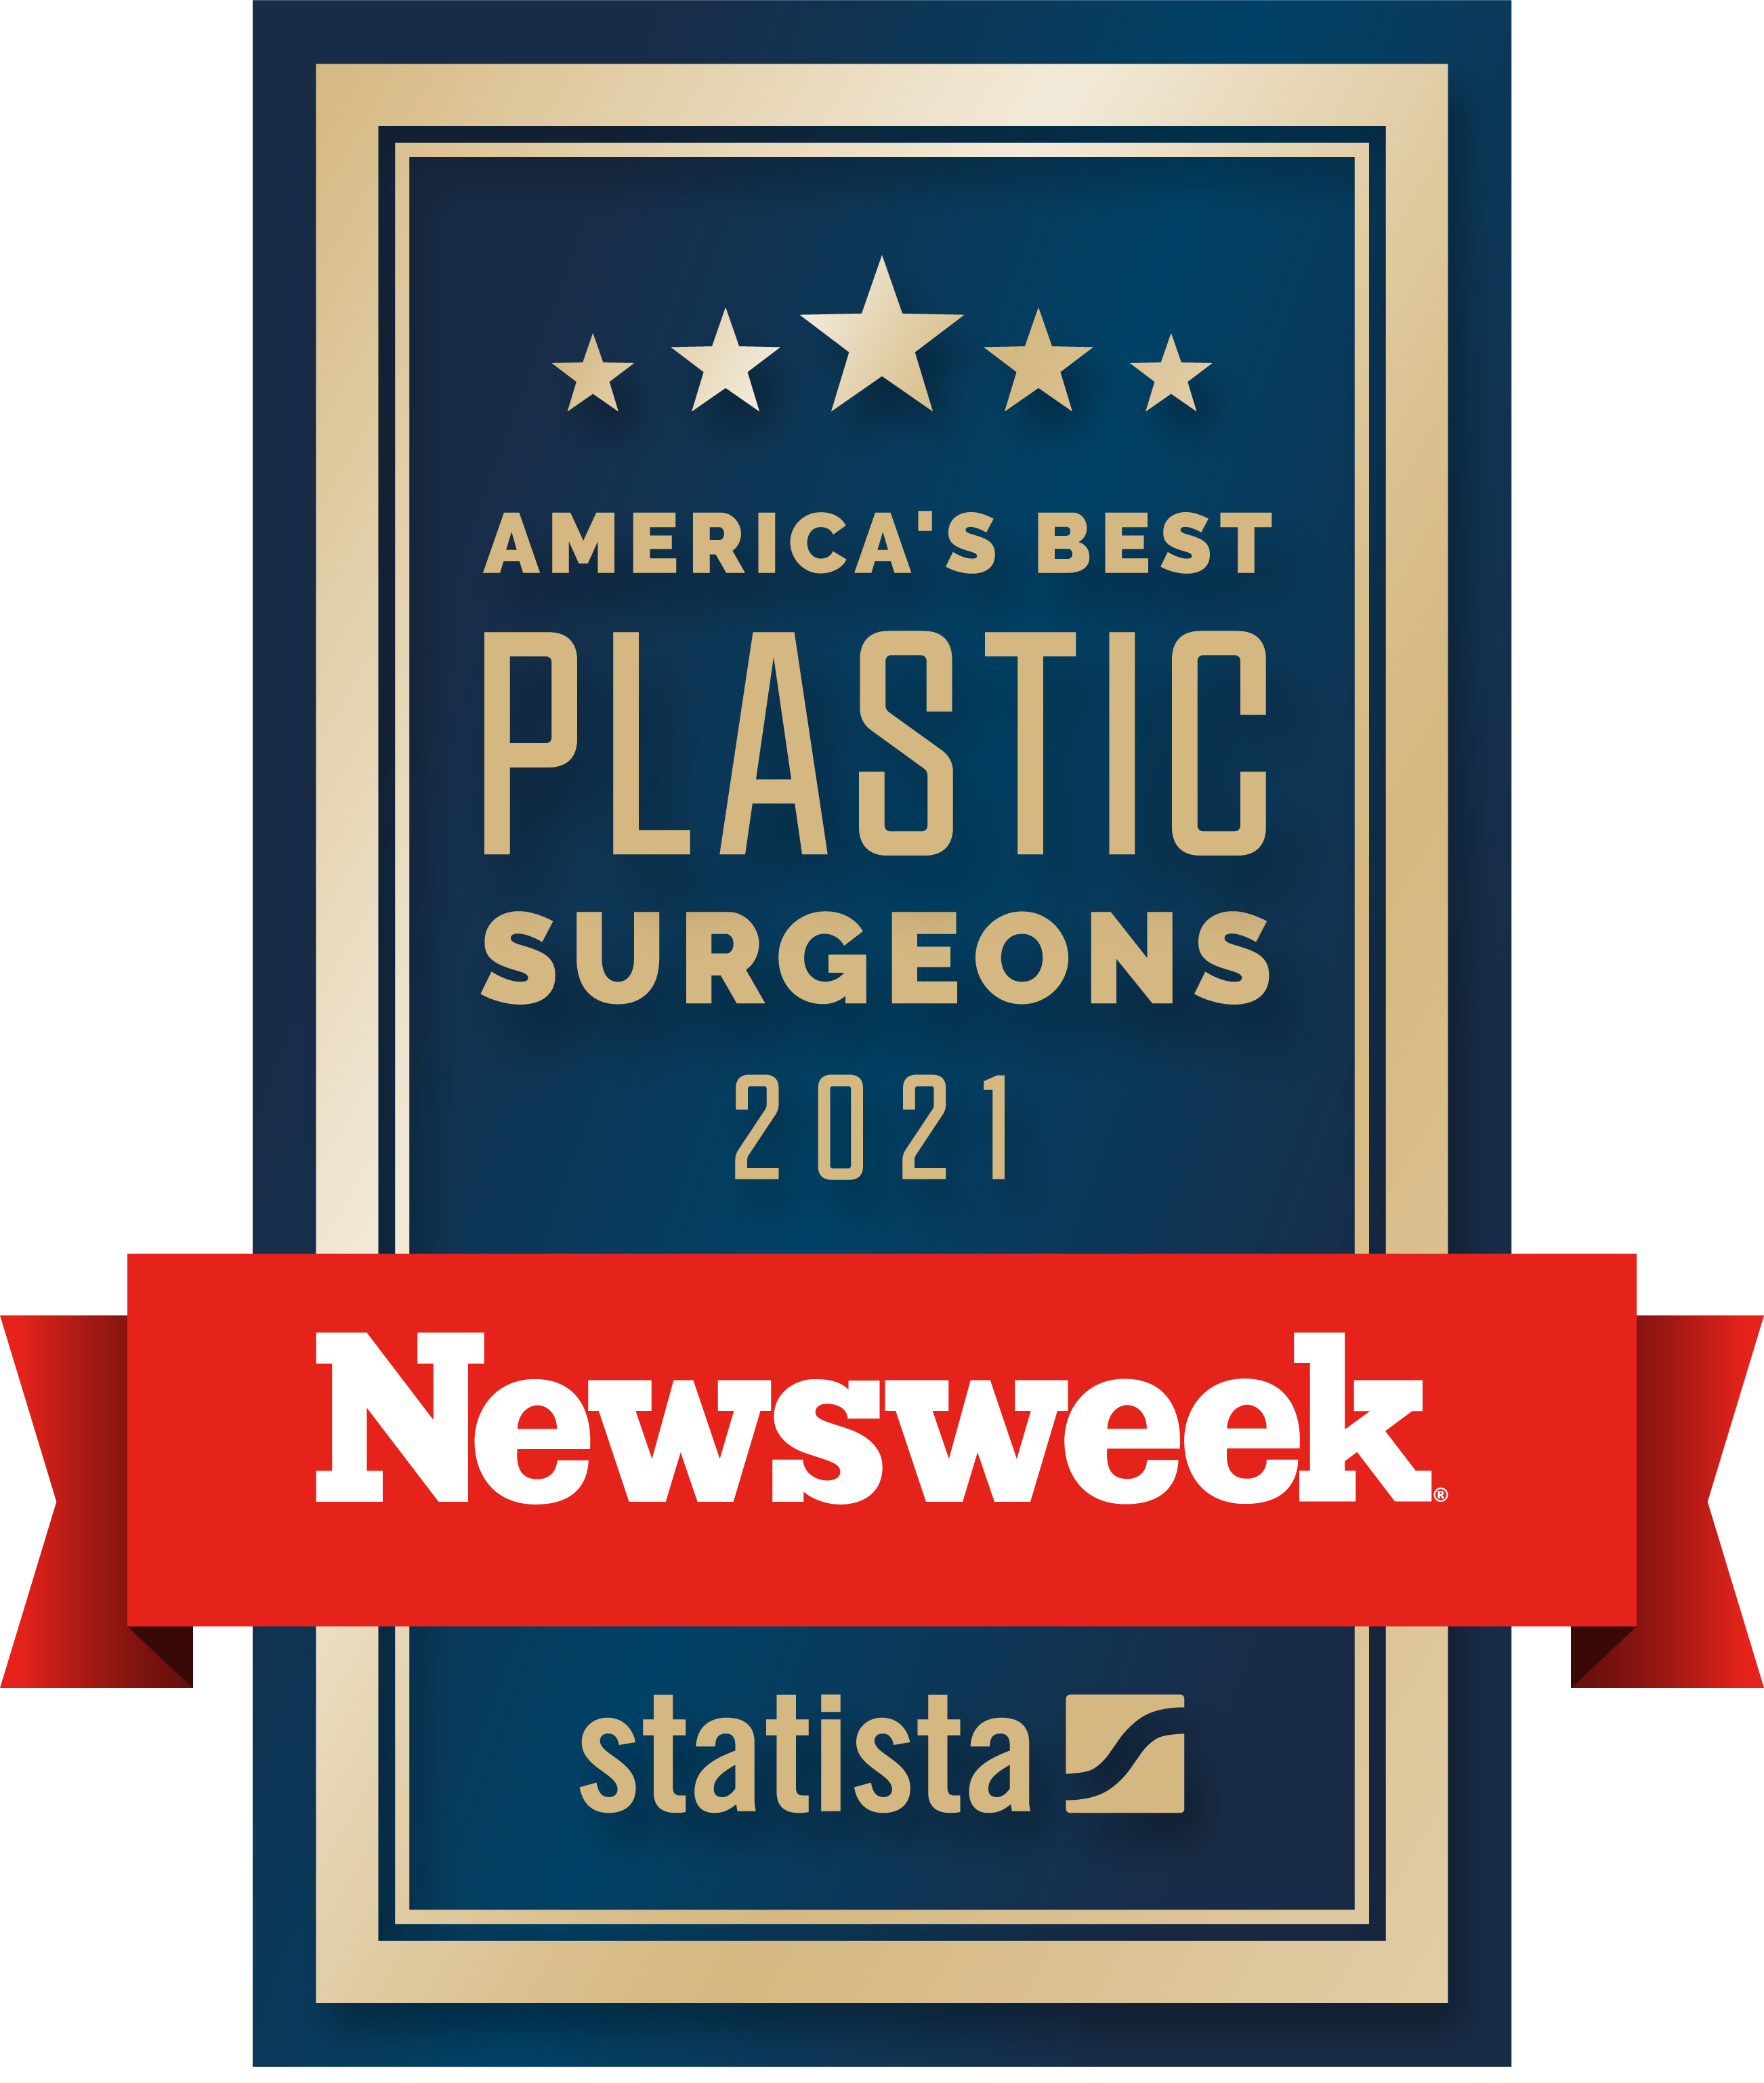 Jeff Marcus named one of America's best plastic surgeons